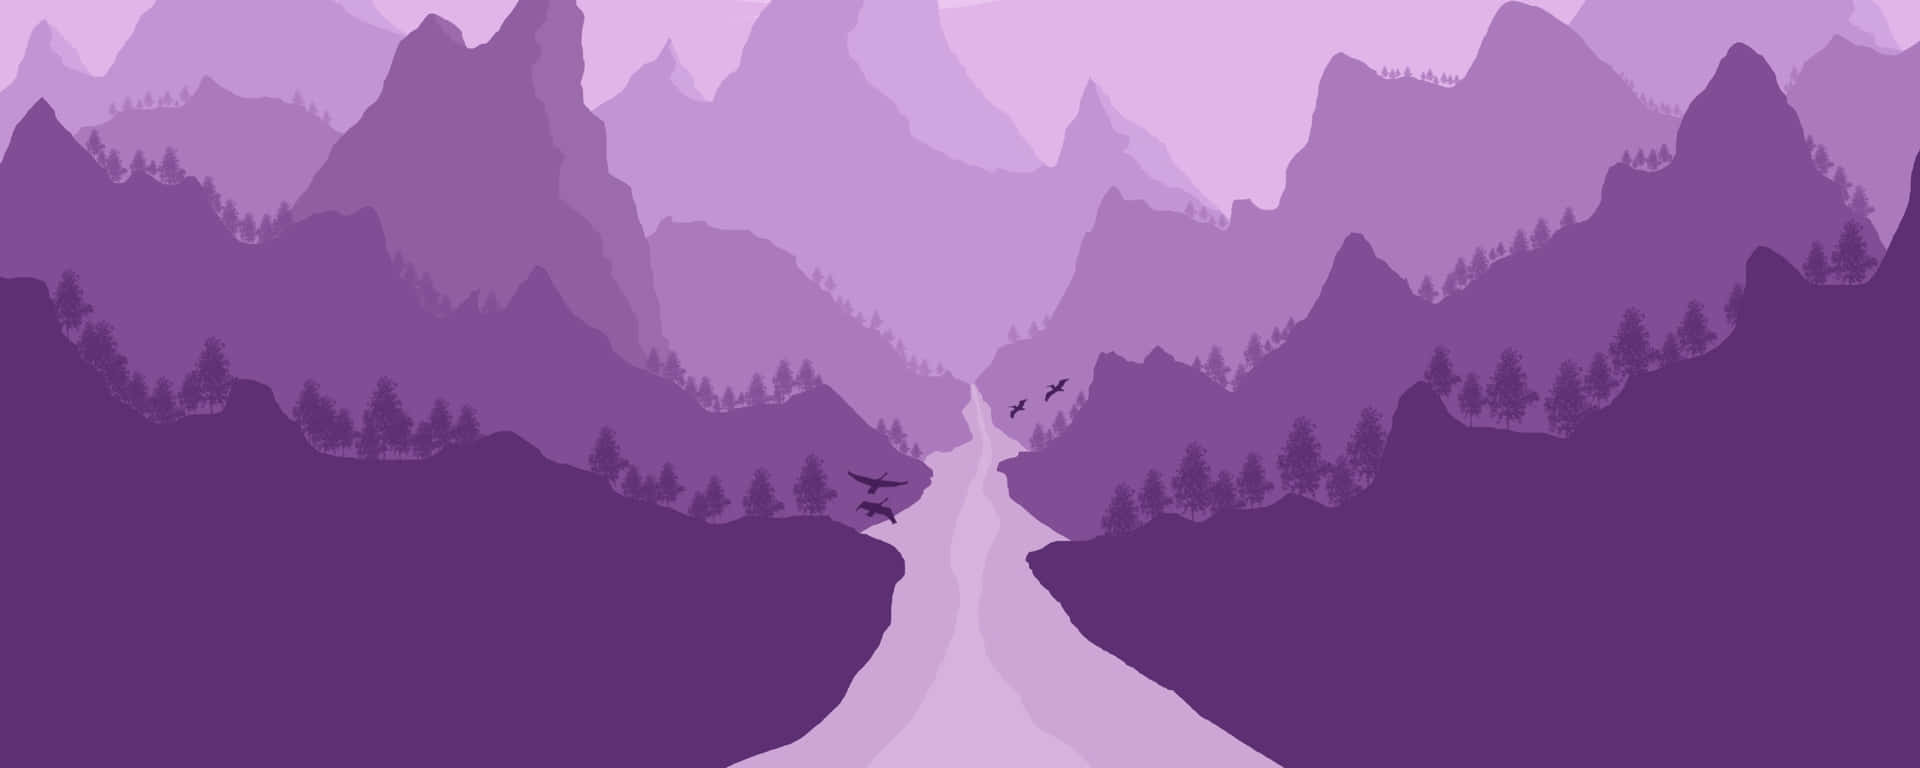 A Purple Mountain Landscape With A River Wallpaper